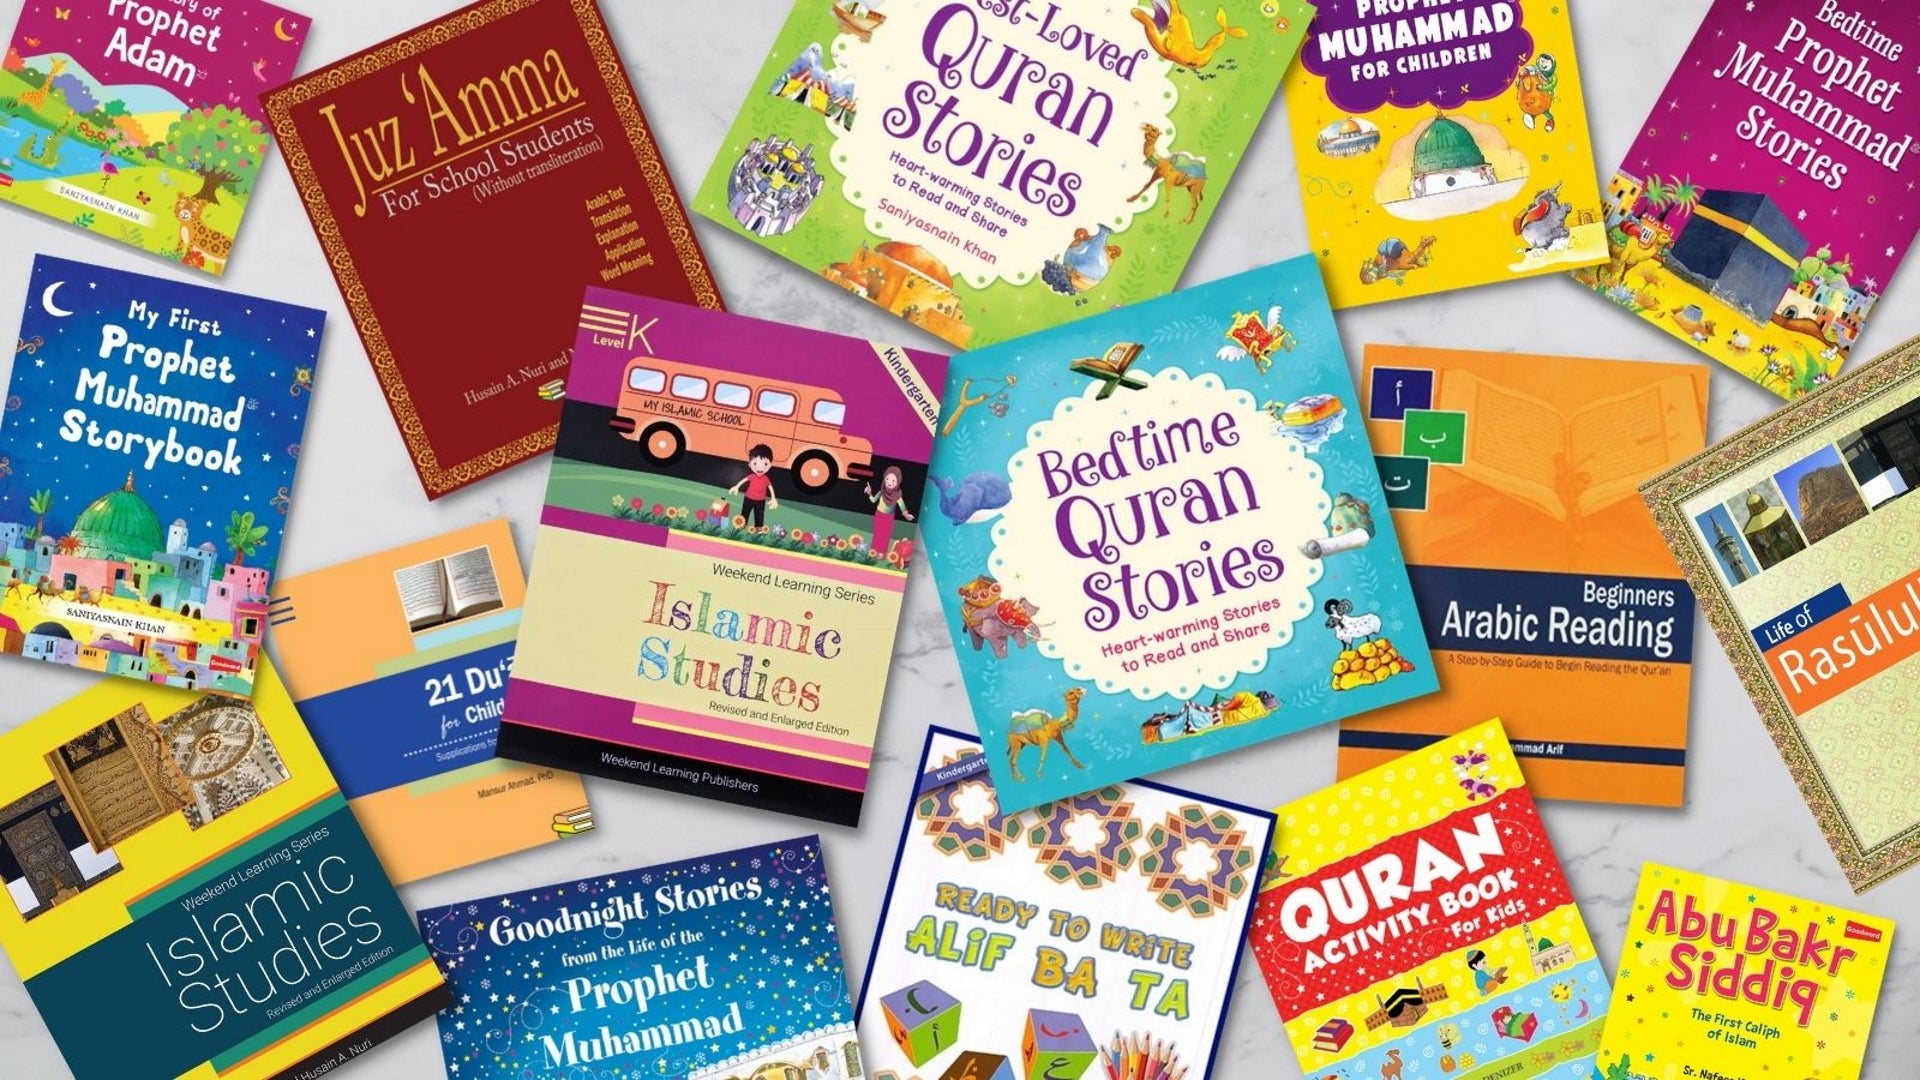 Islamic Studies, Quran Studies, Arabic Learning, Seerah, Activity Books, Story Books, Board Books